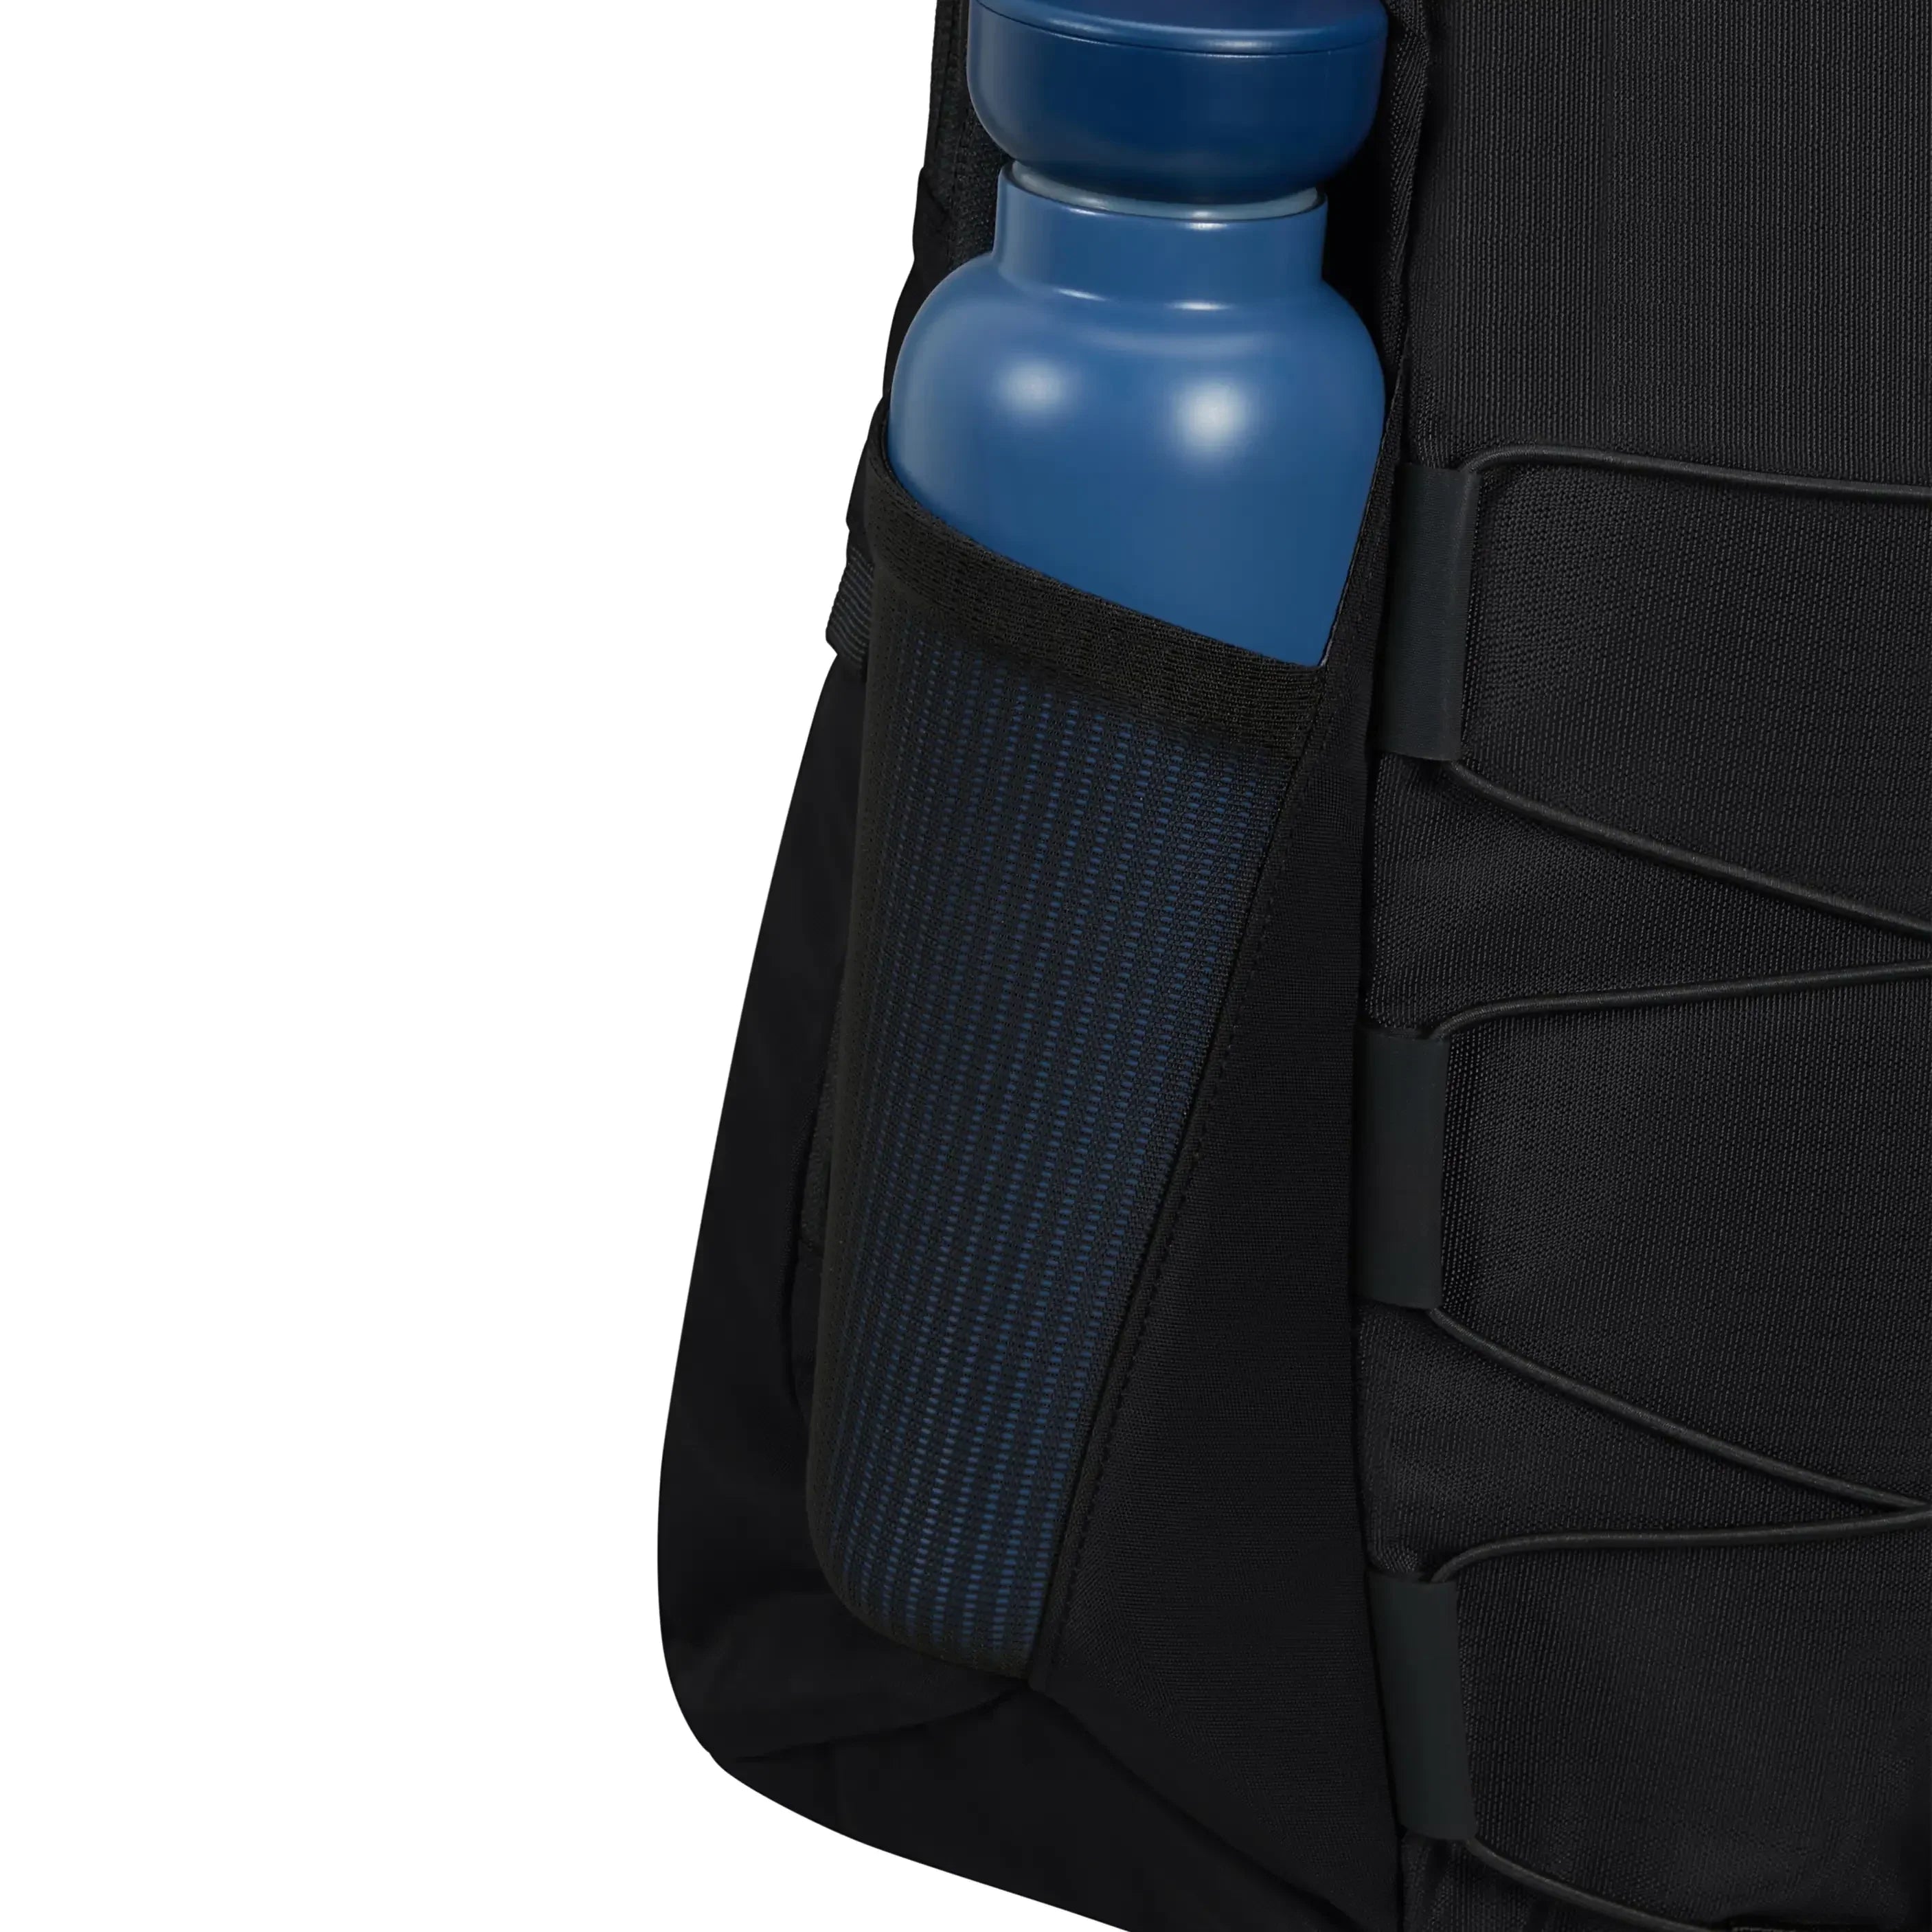 Samsonite Dye-Namic Backpack S 42 cm - black